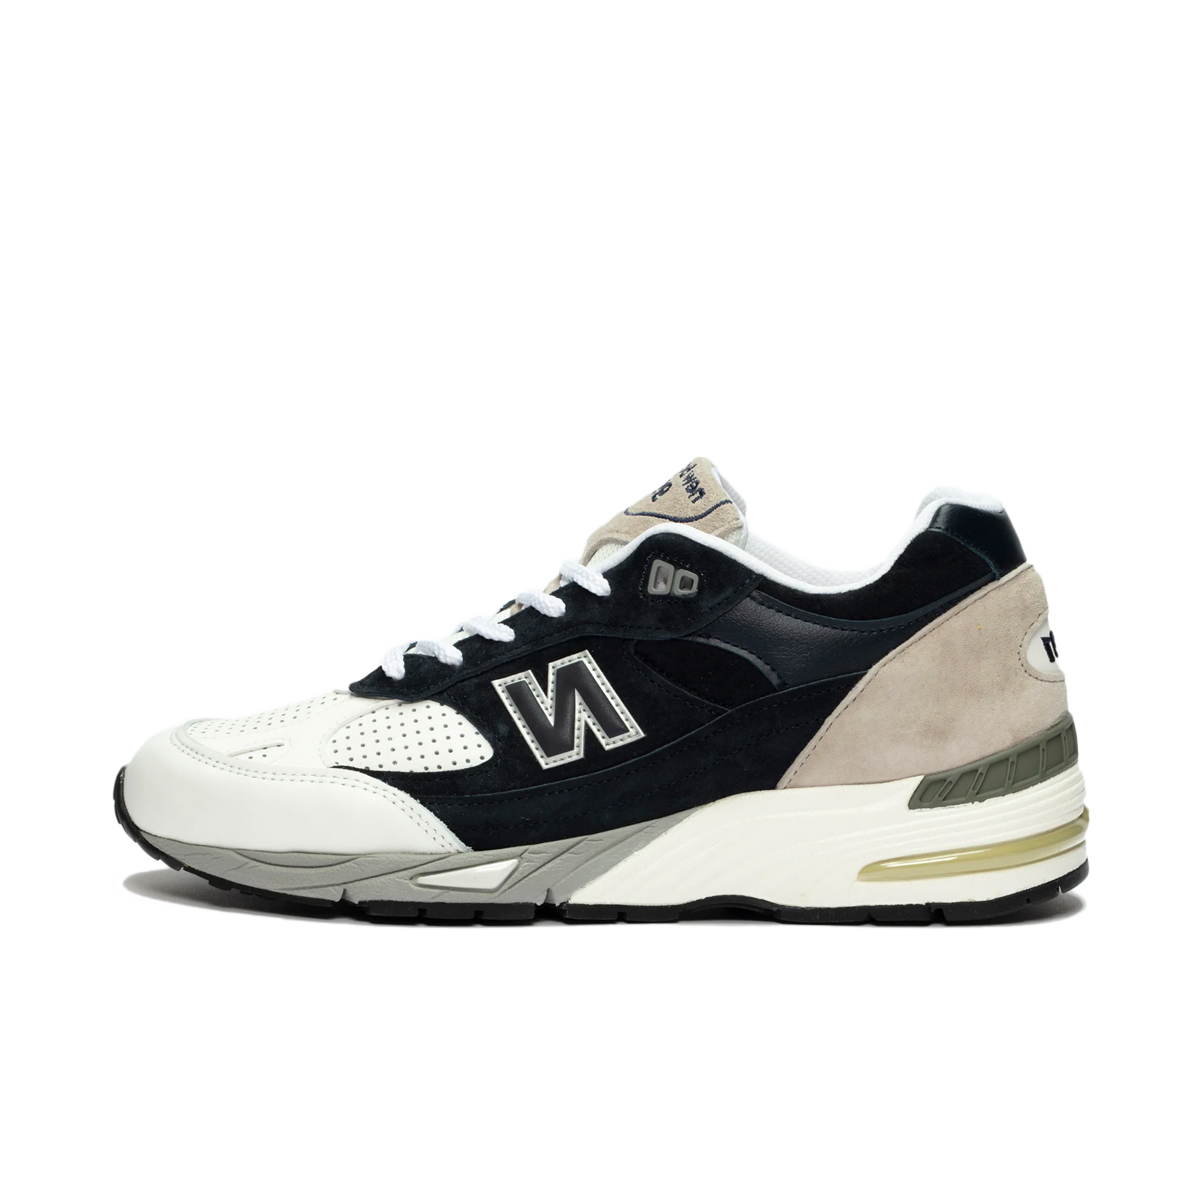 Sneakersnstuff x New Balance 991 'Navy'